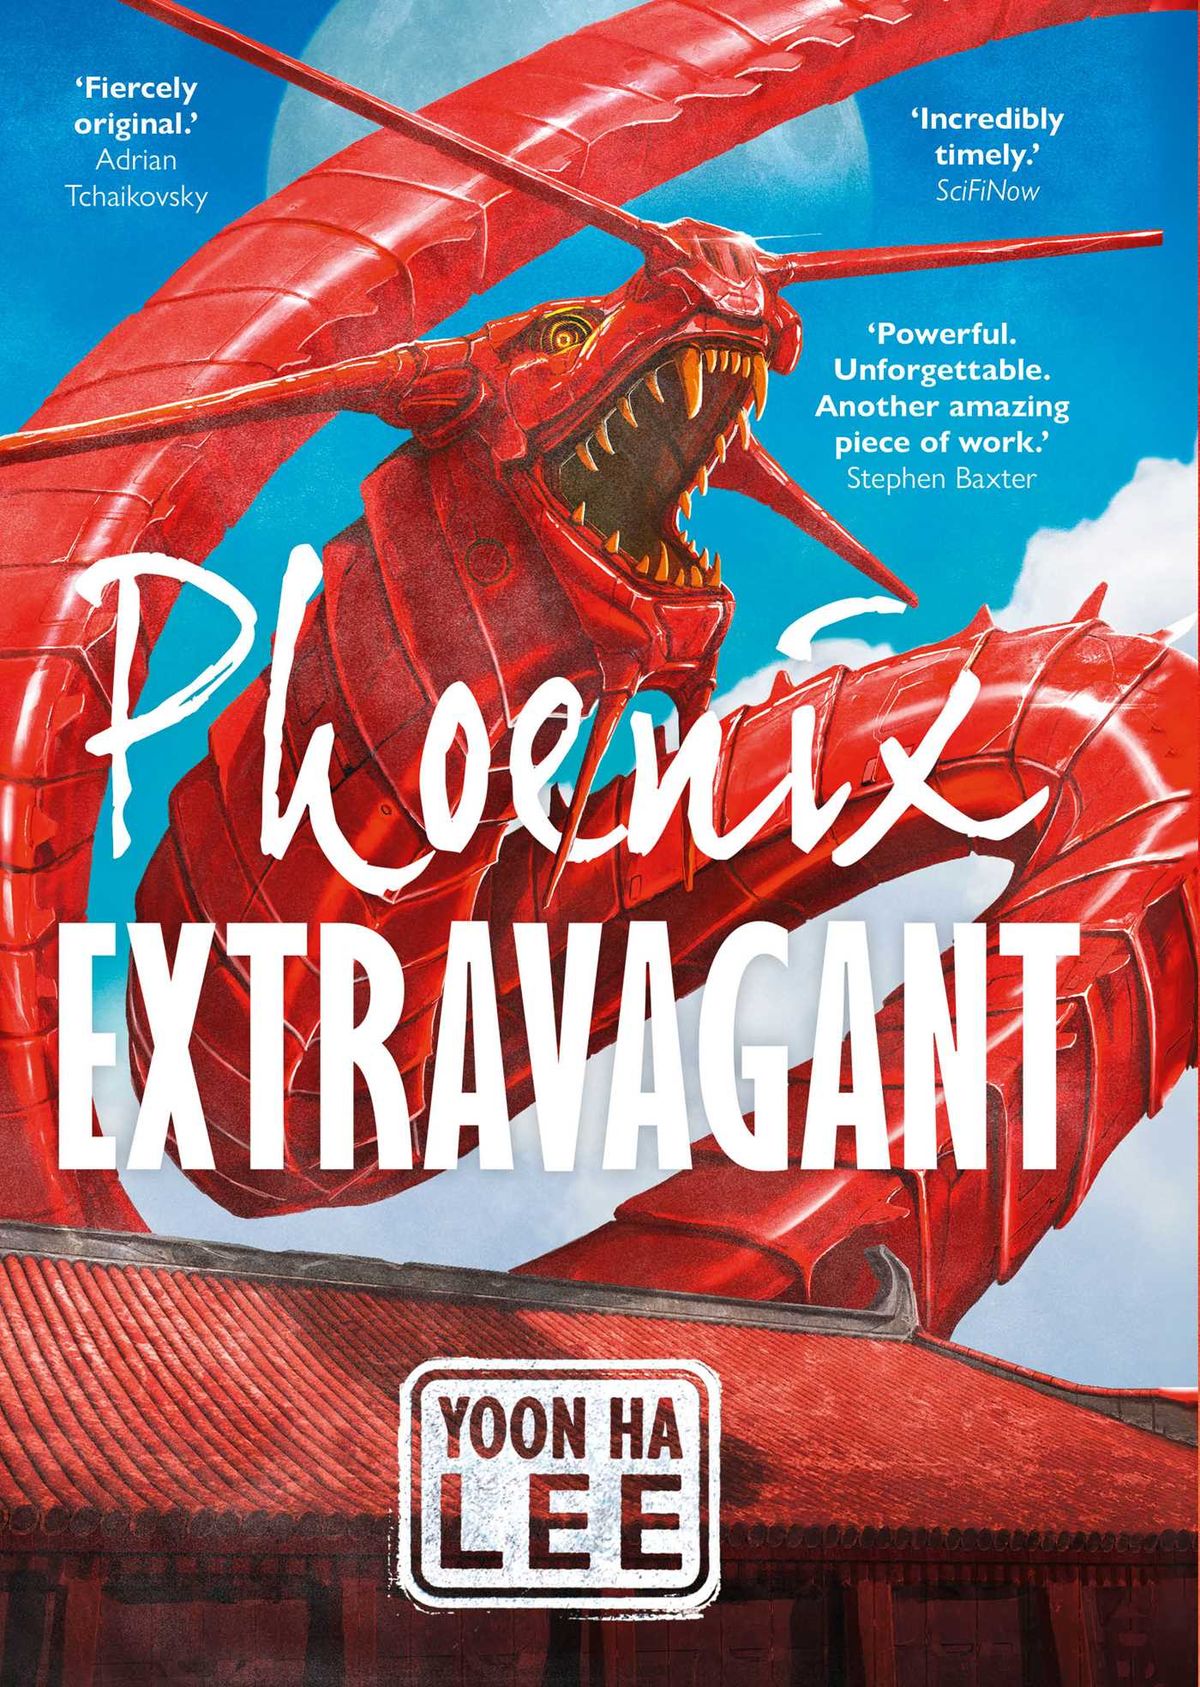 The cover of Yoon Ha Lee’s Phoenix Extravagant